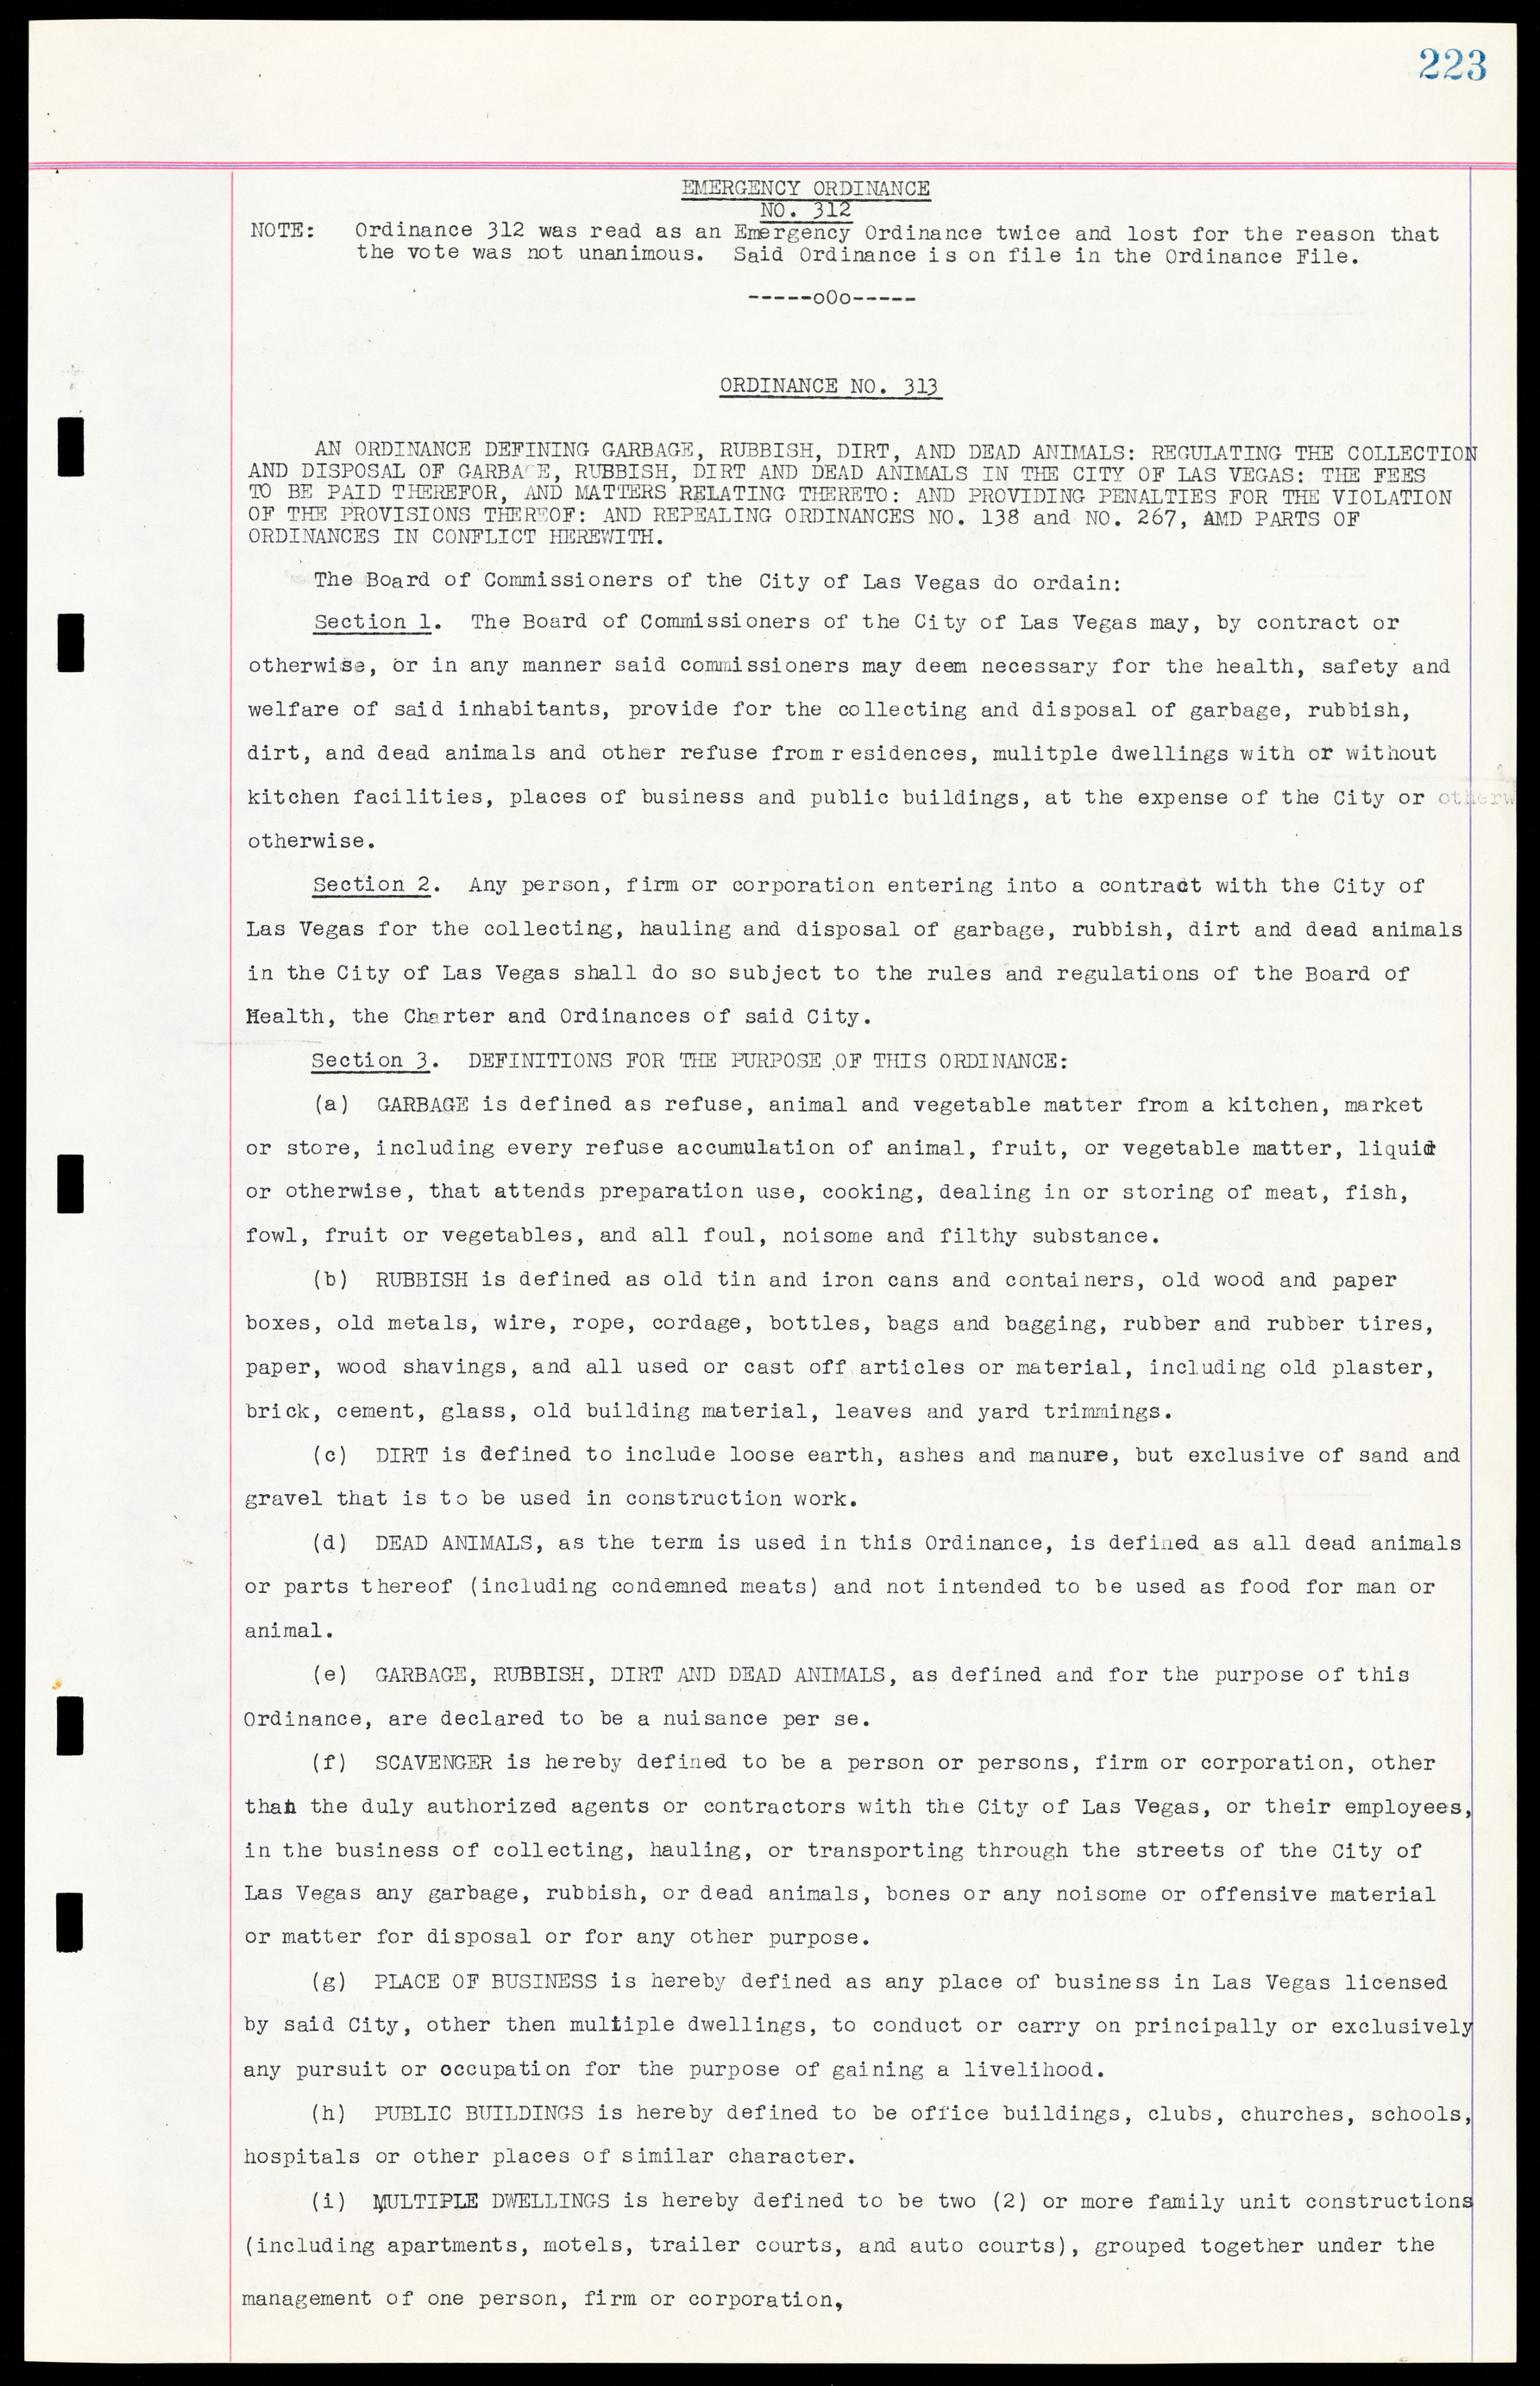 Las Vegas City Ordinances, March 31, 1933 to October 25, 1950, lvc000014-252